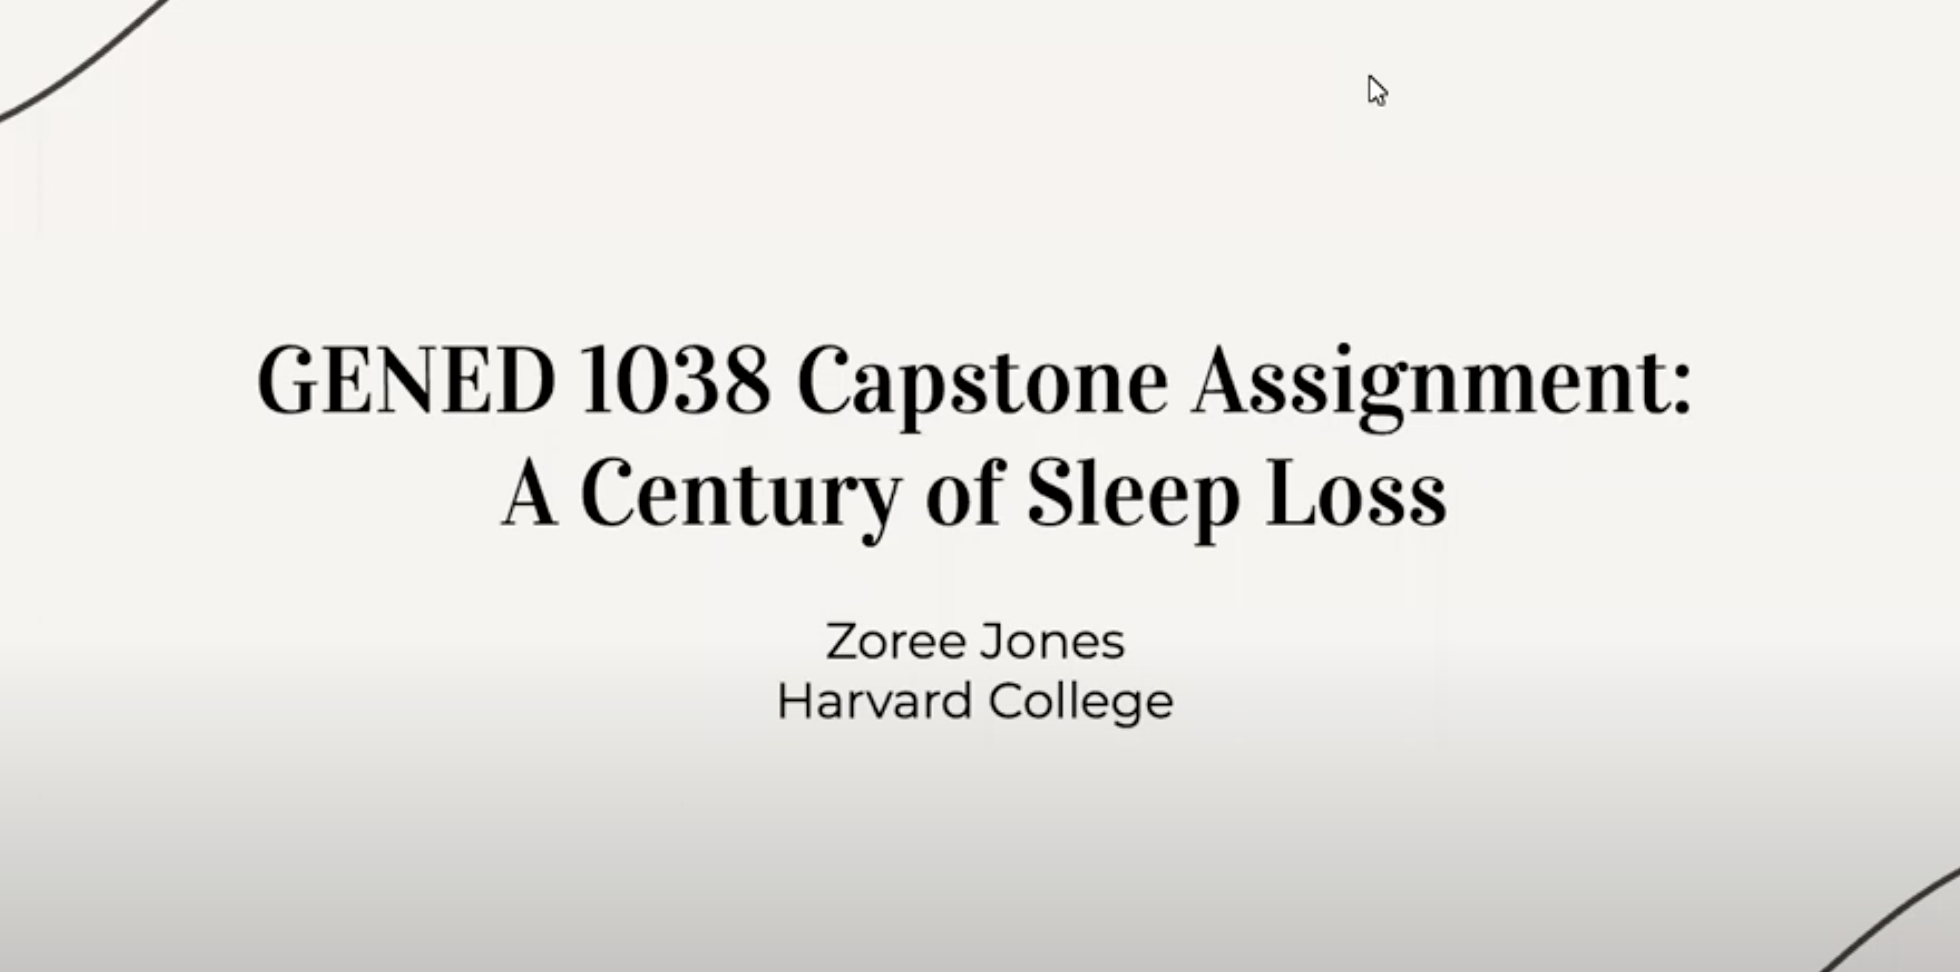 Capstone Sleep Presentation: A Century of Sleep Loss